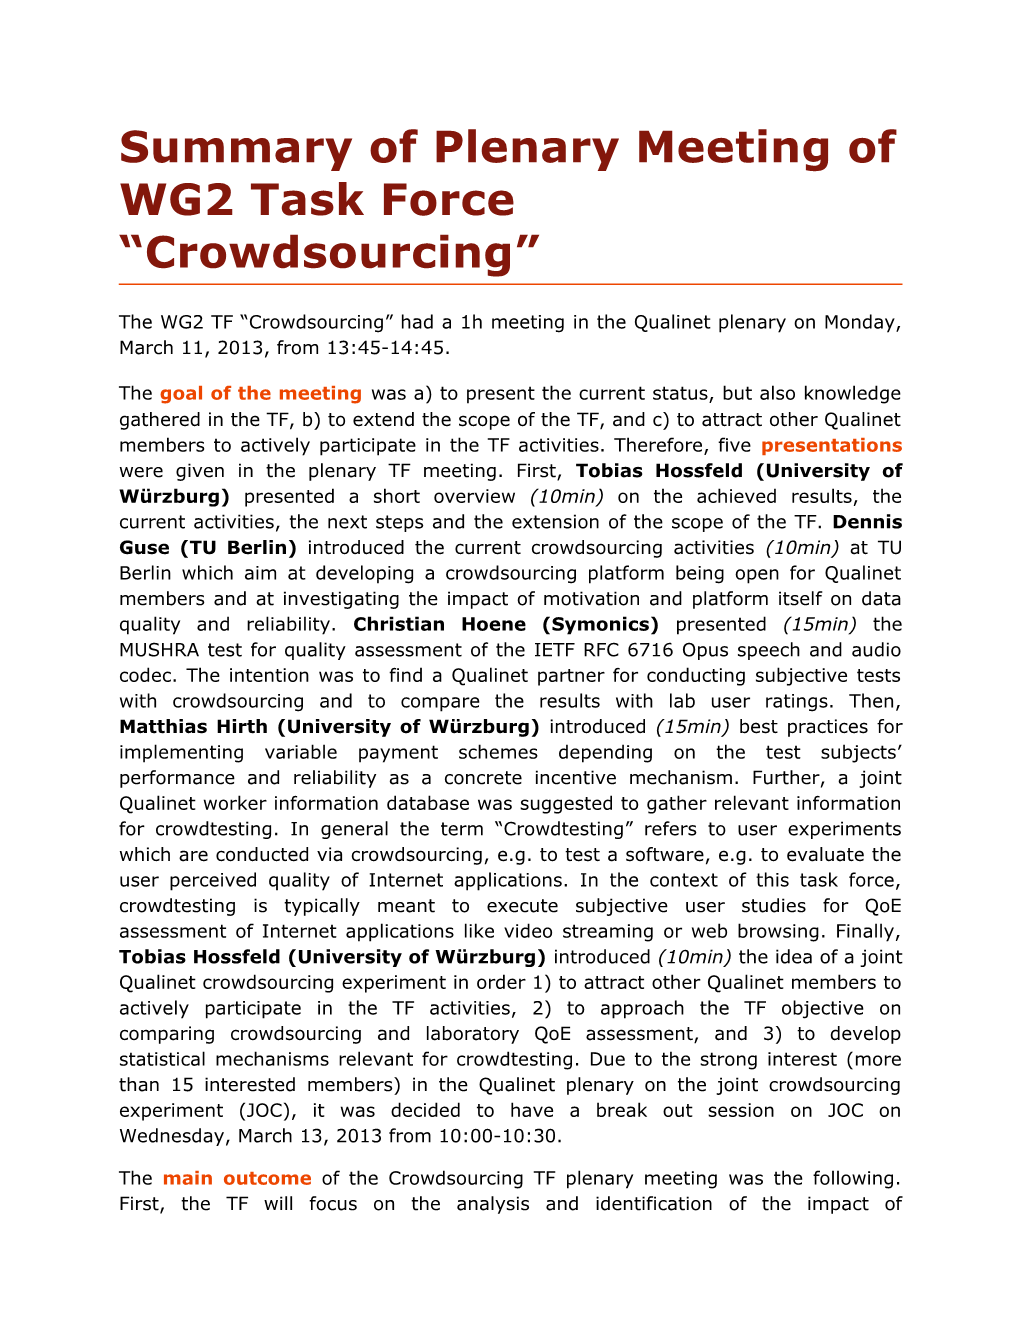 Summary of Plenary Meeting of WG2 Task Force Crowdsourcing